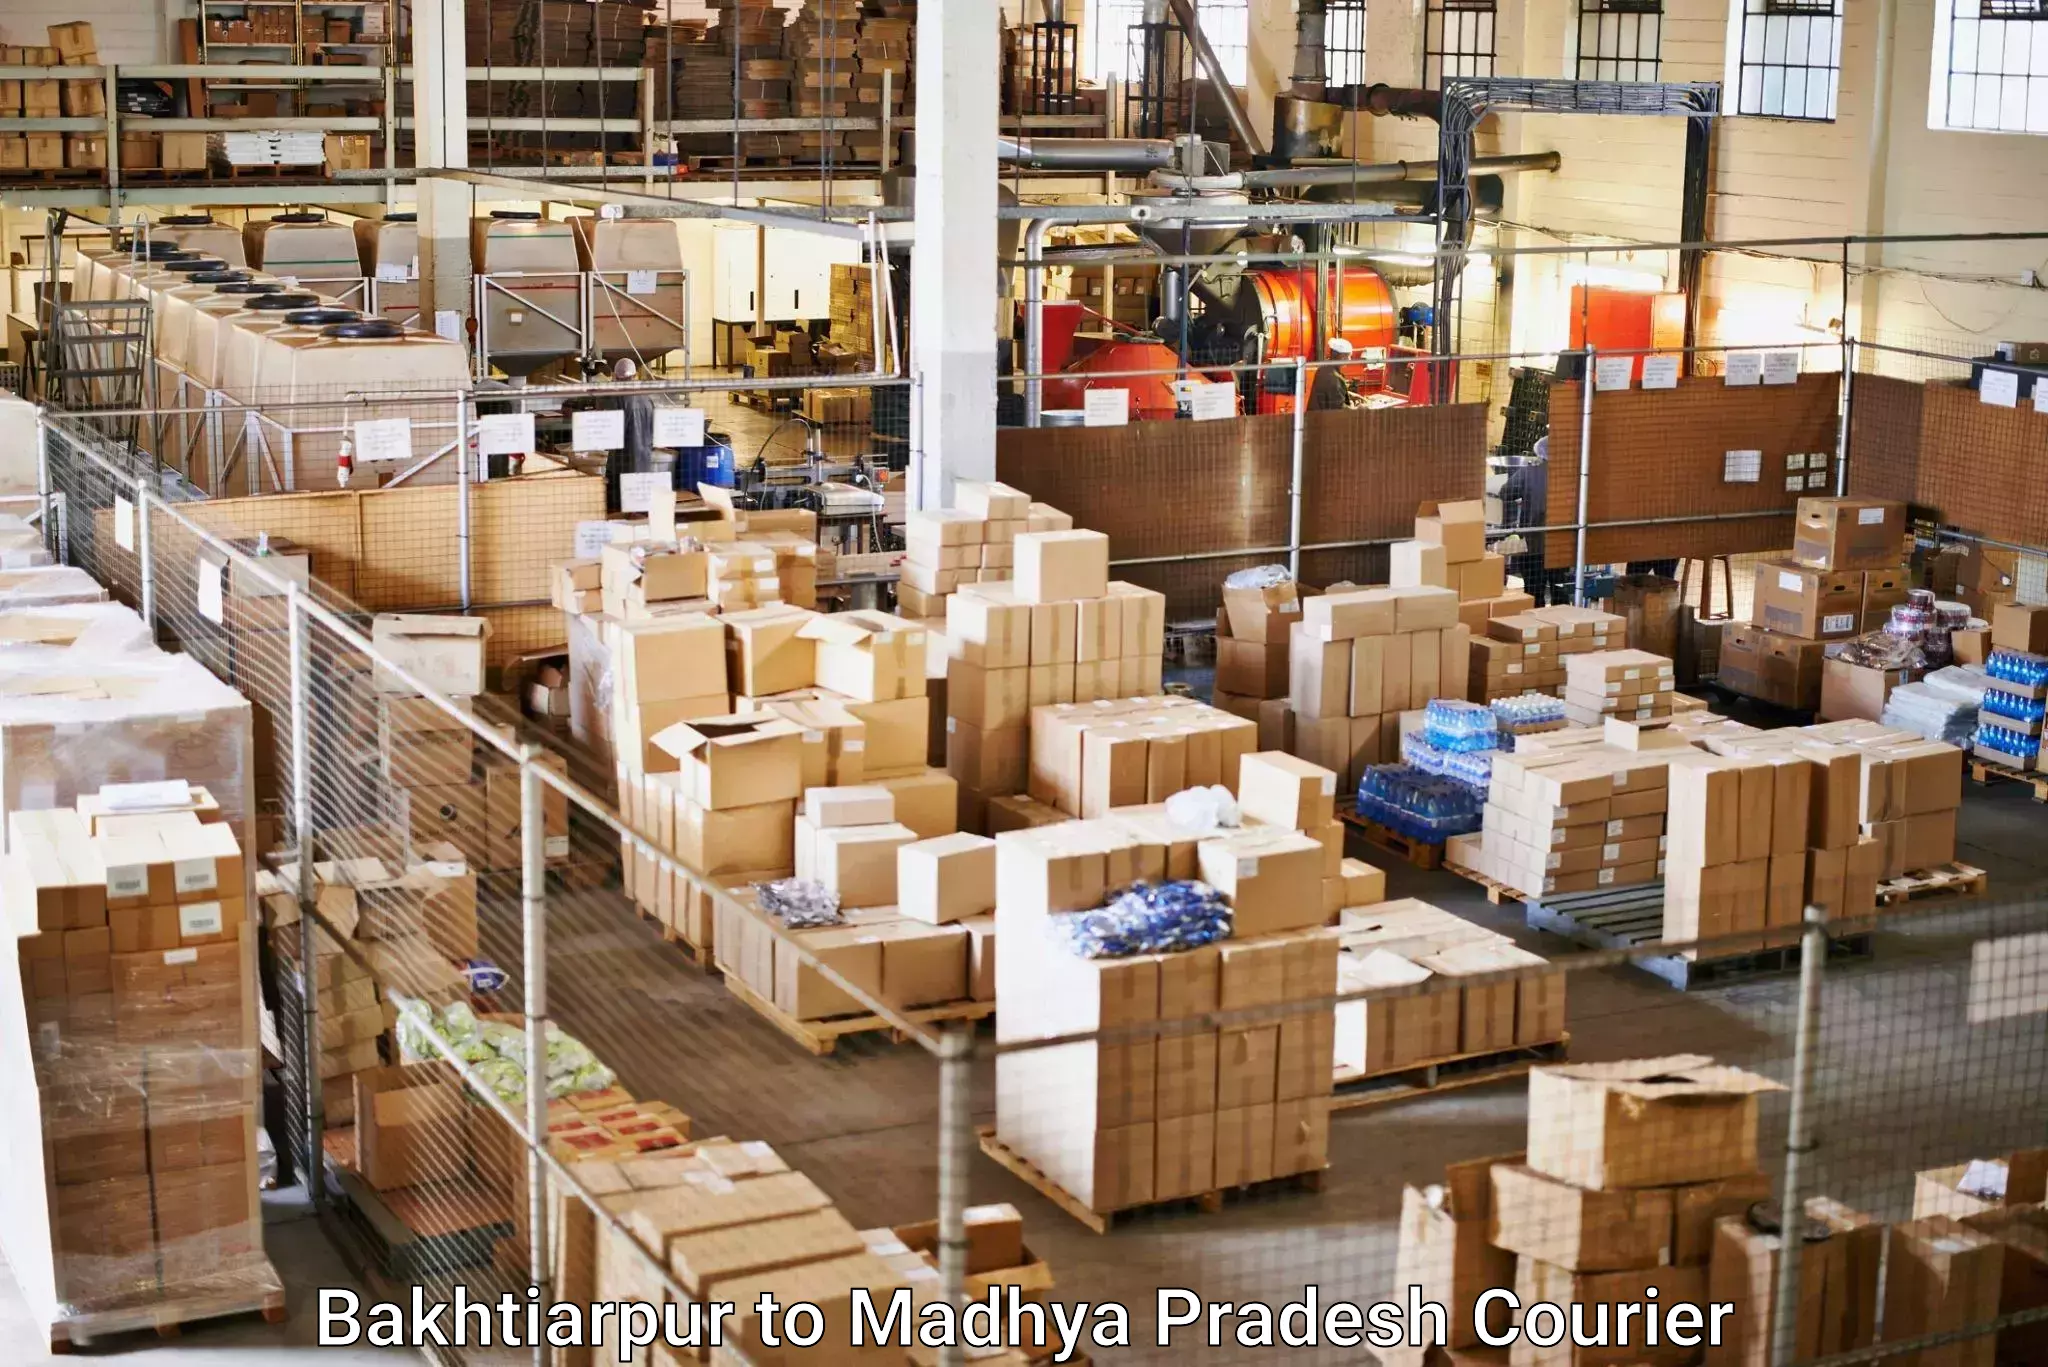 Global logistics network Bakhtiarpur to Banda Sagar